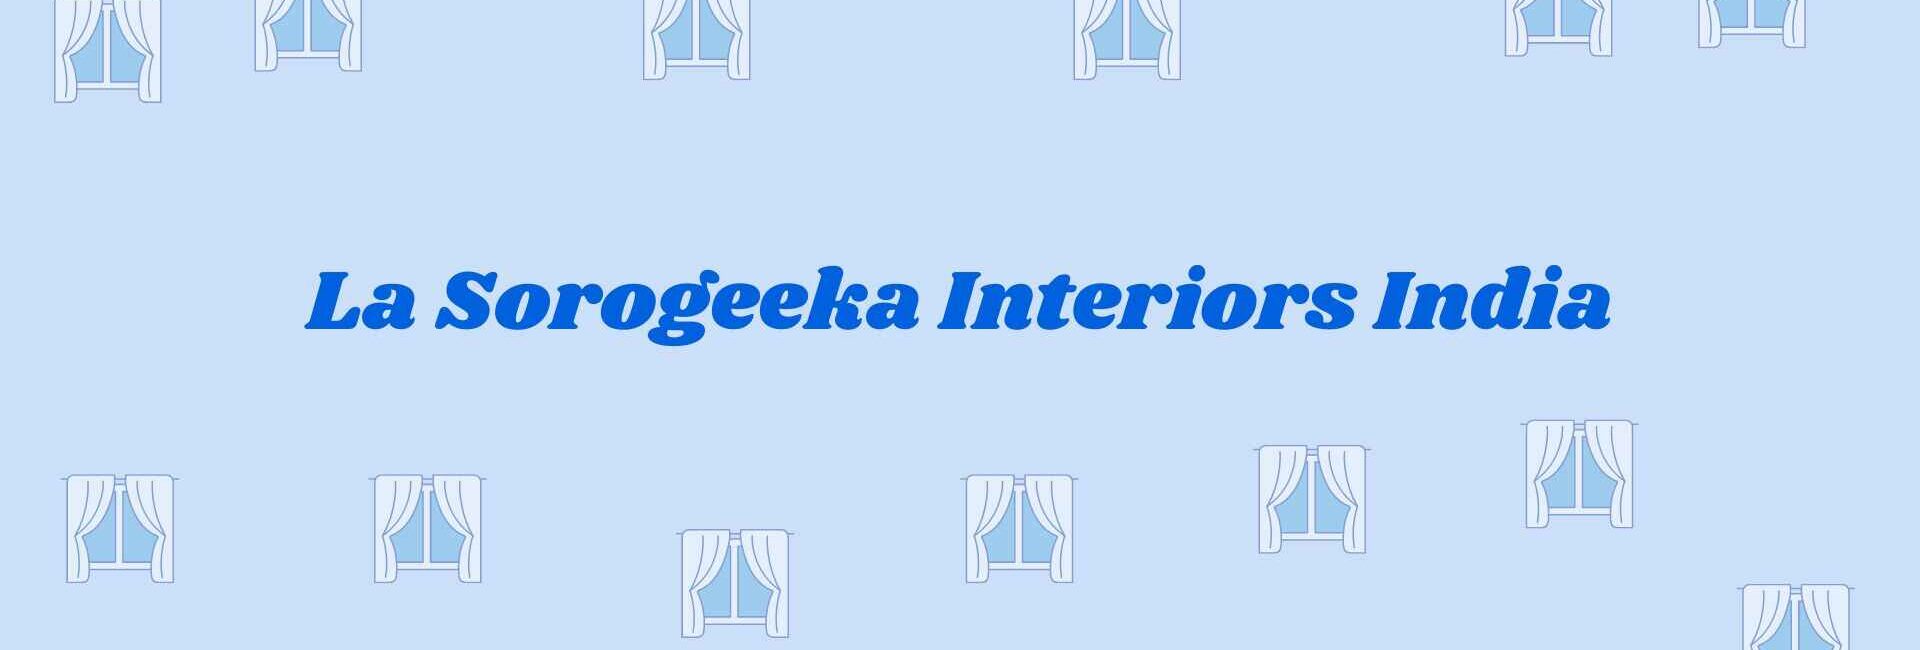 La Sorogeeka Interiors India - home interior dealers in Noida